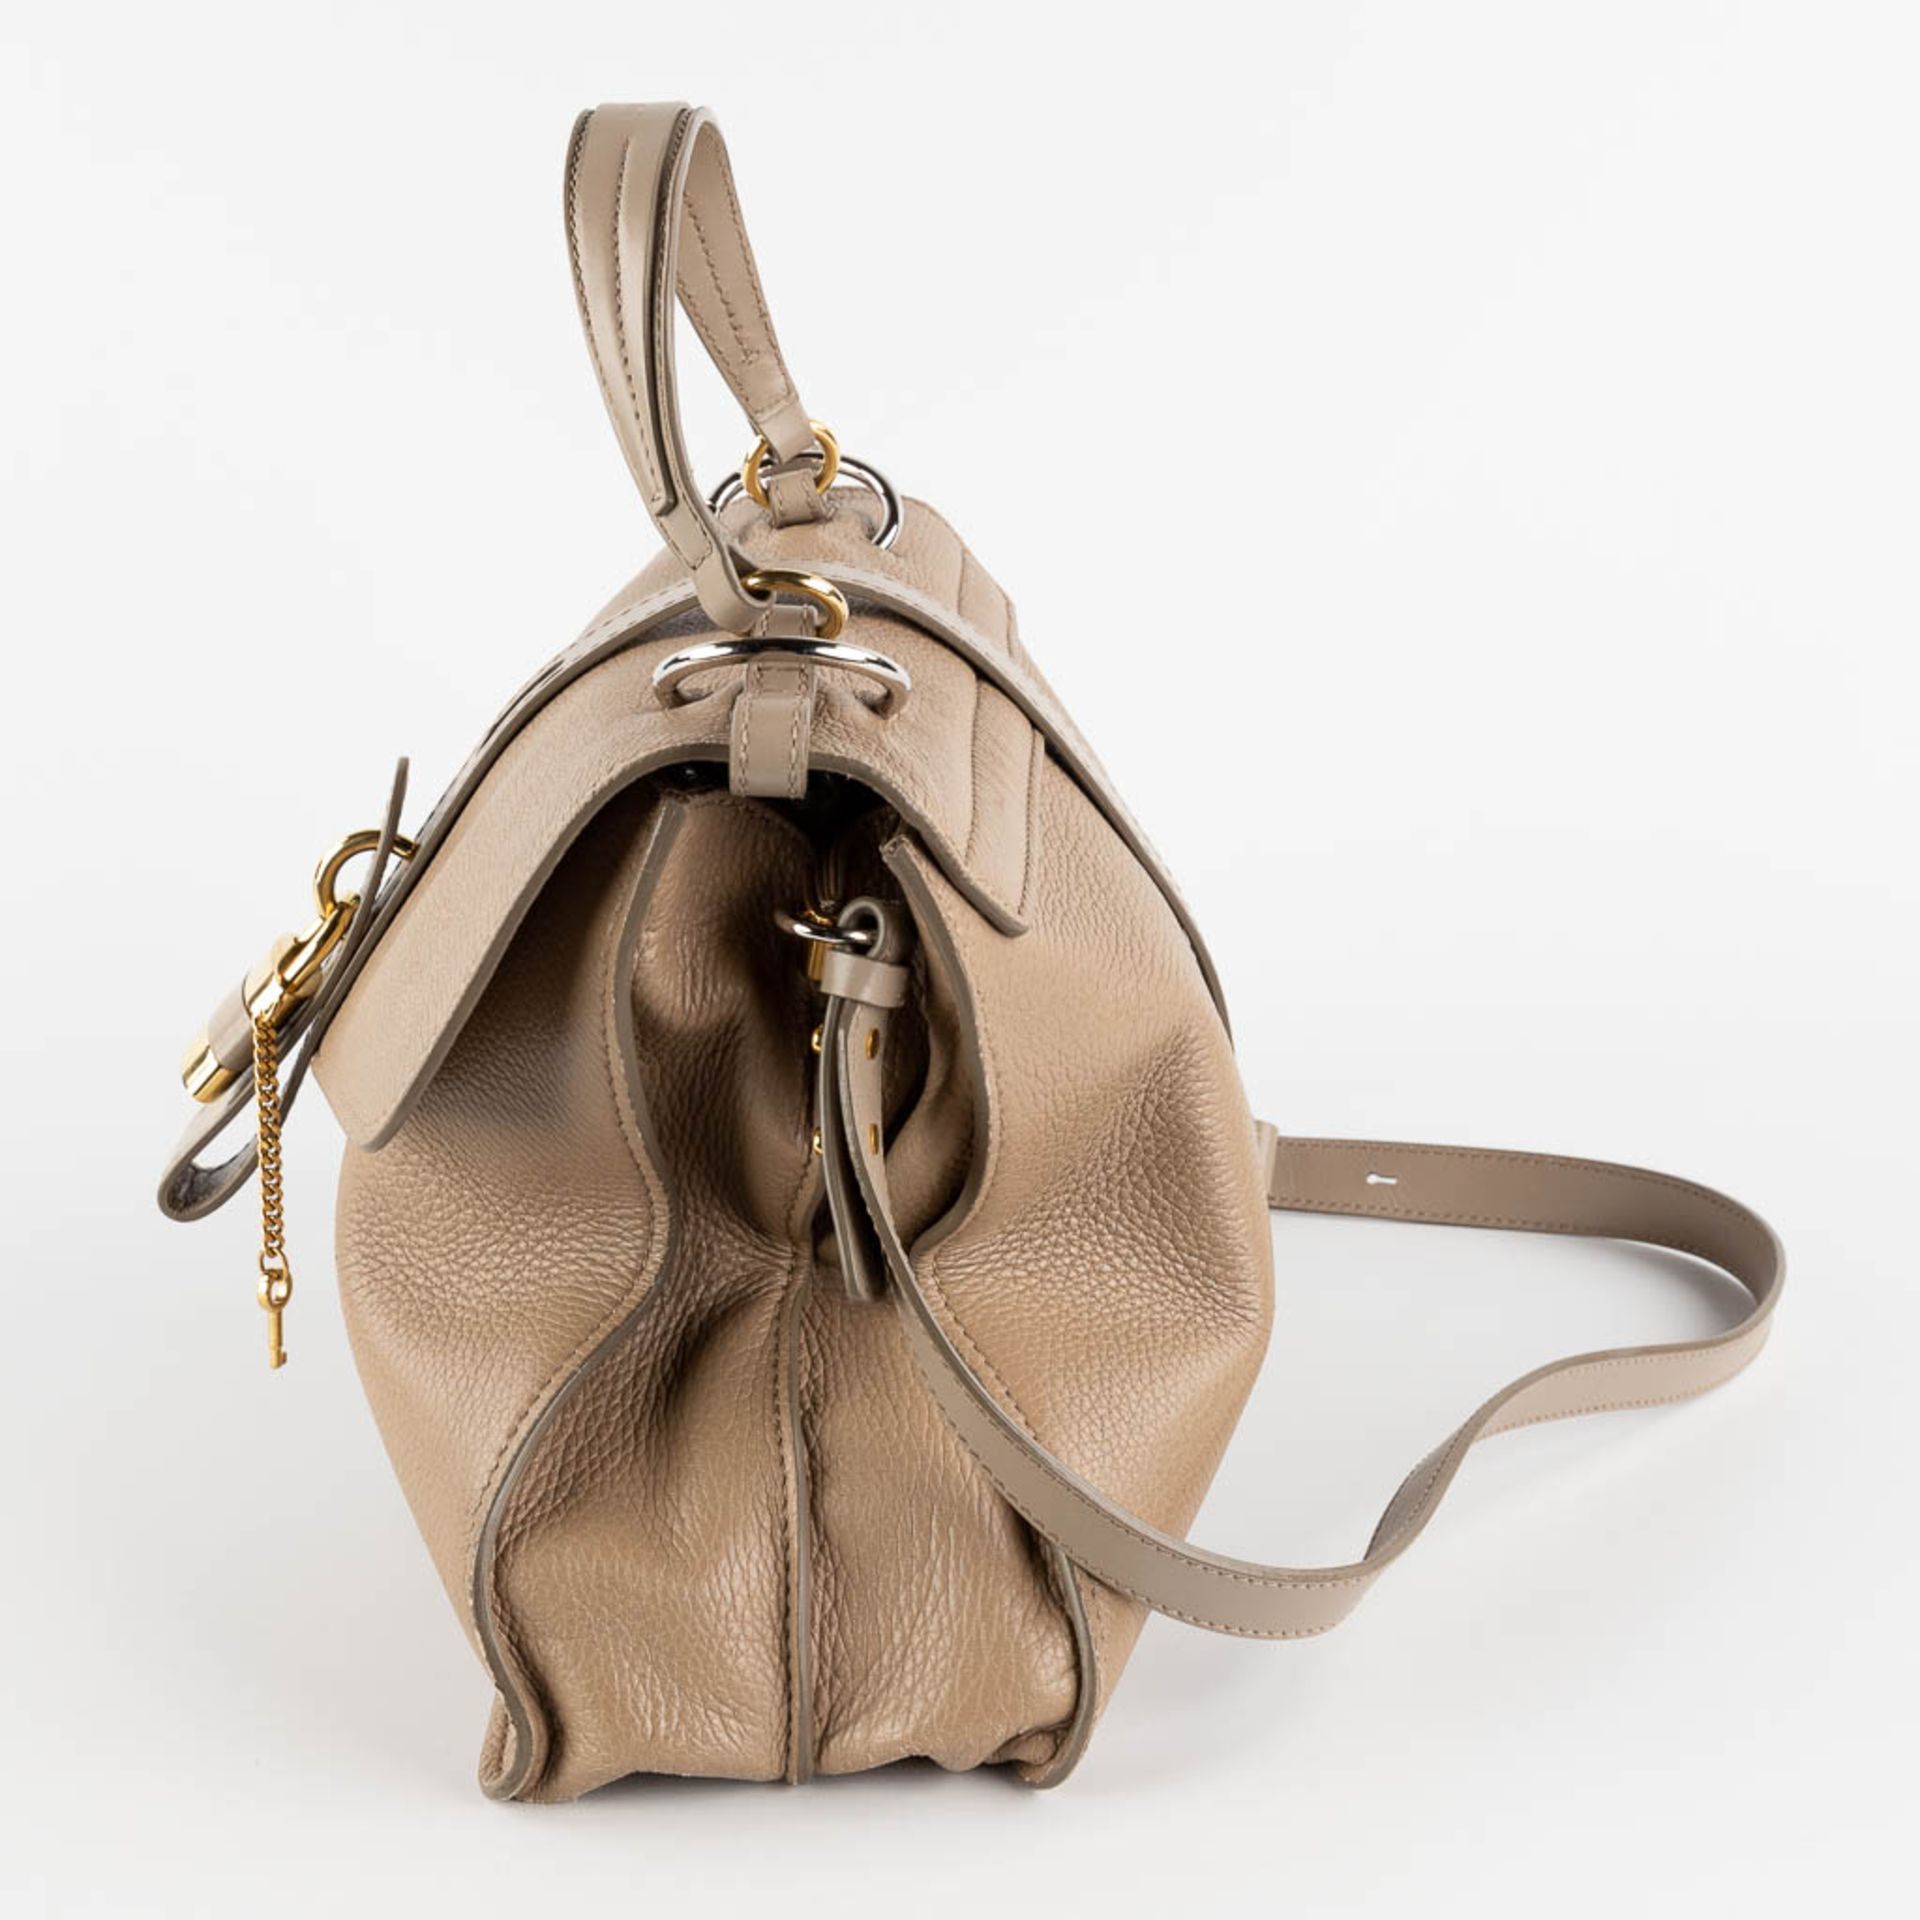 Chloé, a handbag made of brown leather. (W:38 x H:32 cm) - Image 4 of 19